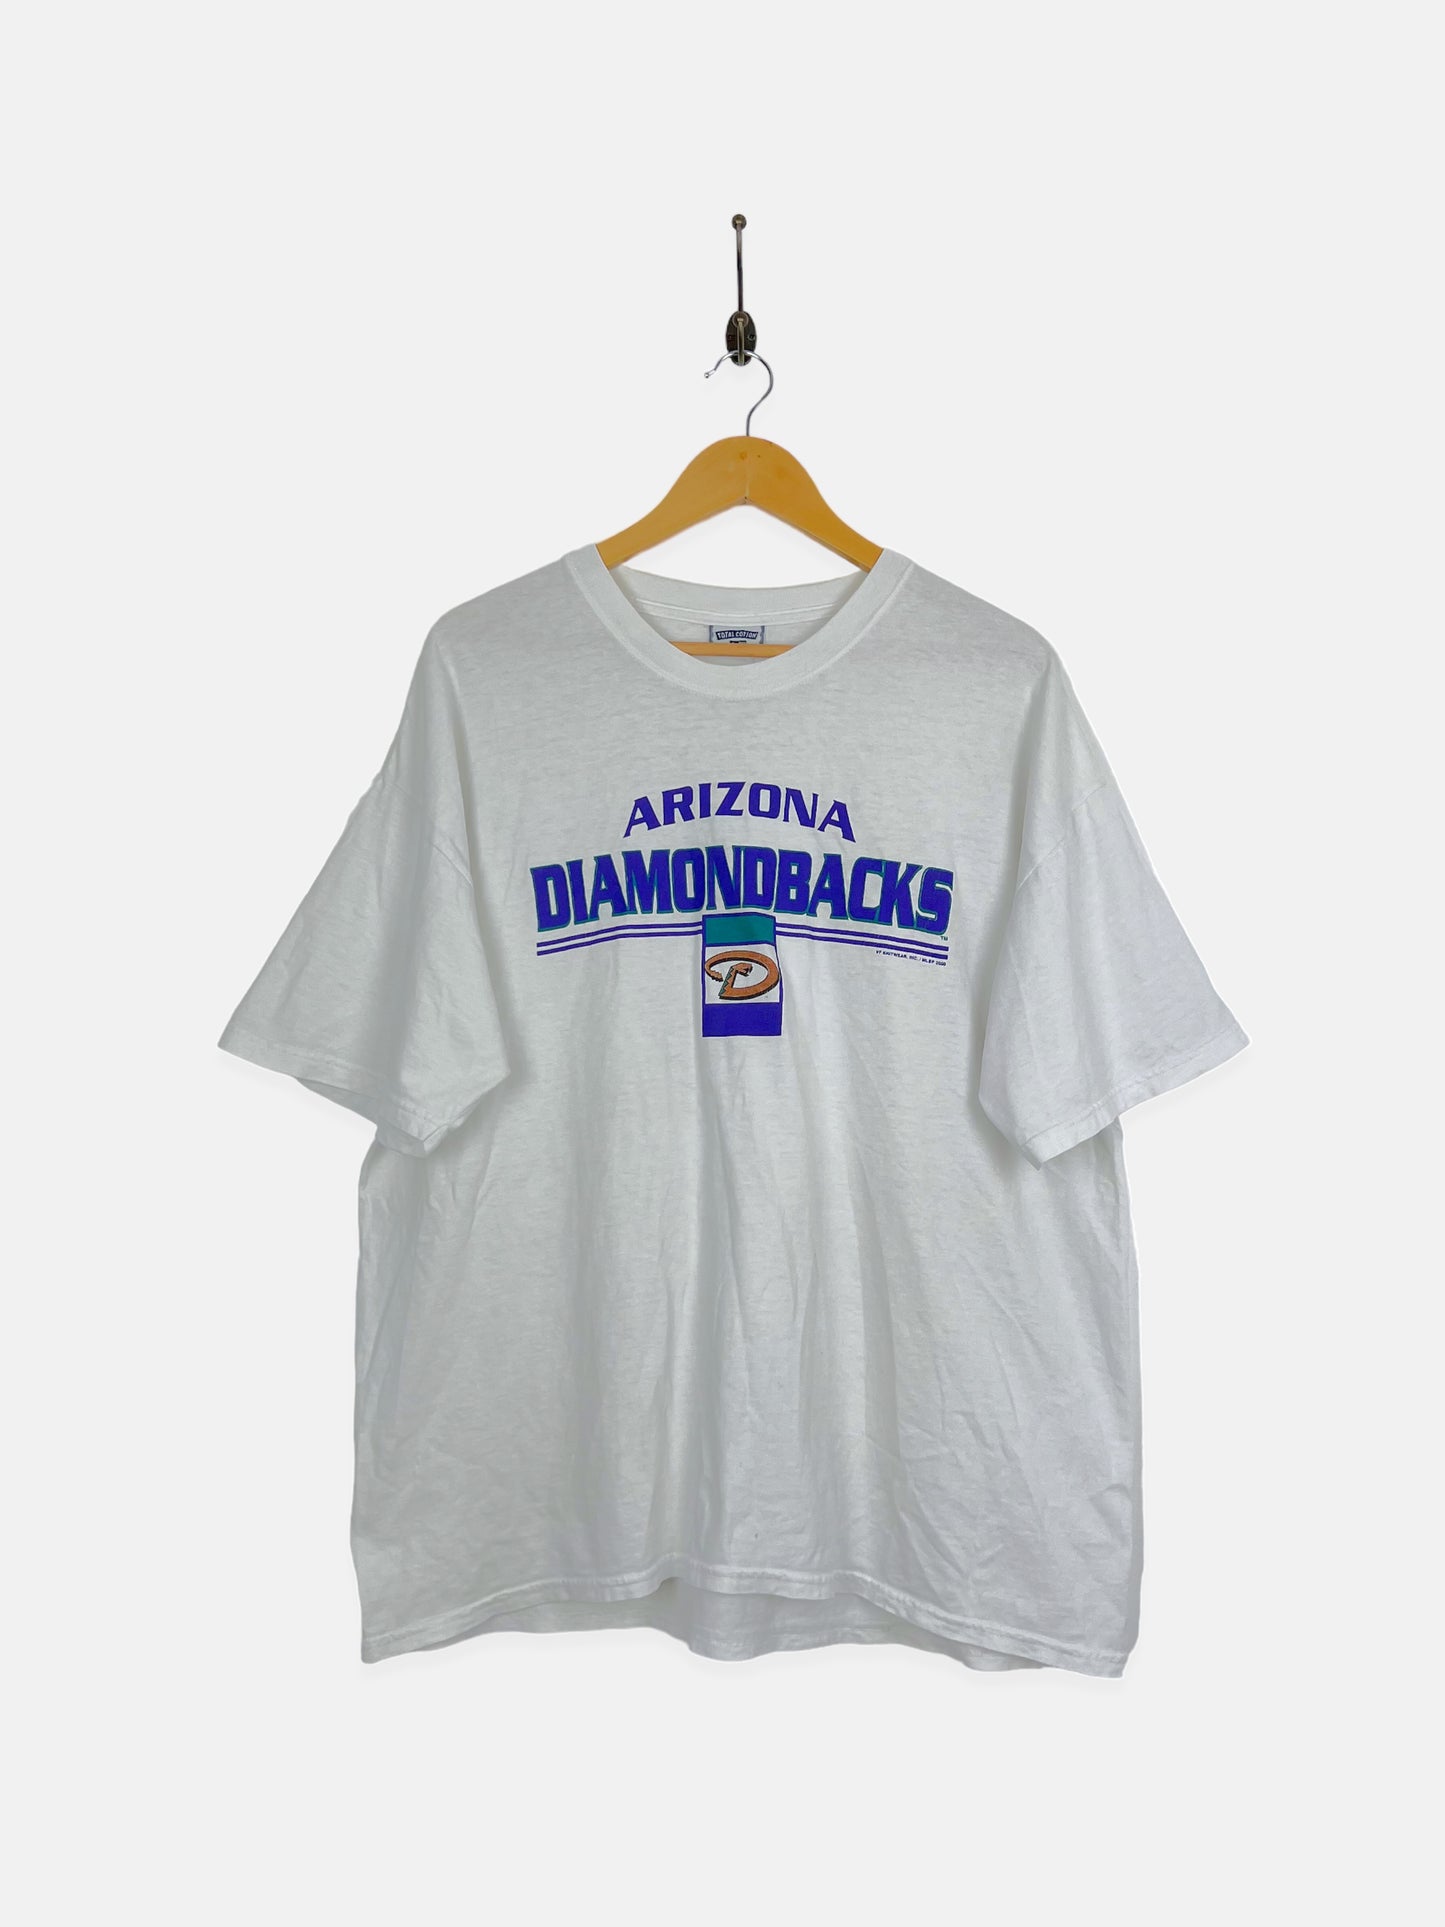 Arizona Diamondbacks MLB Vintage T-Shirt Size L-XL